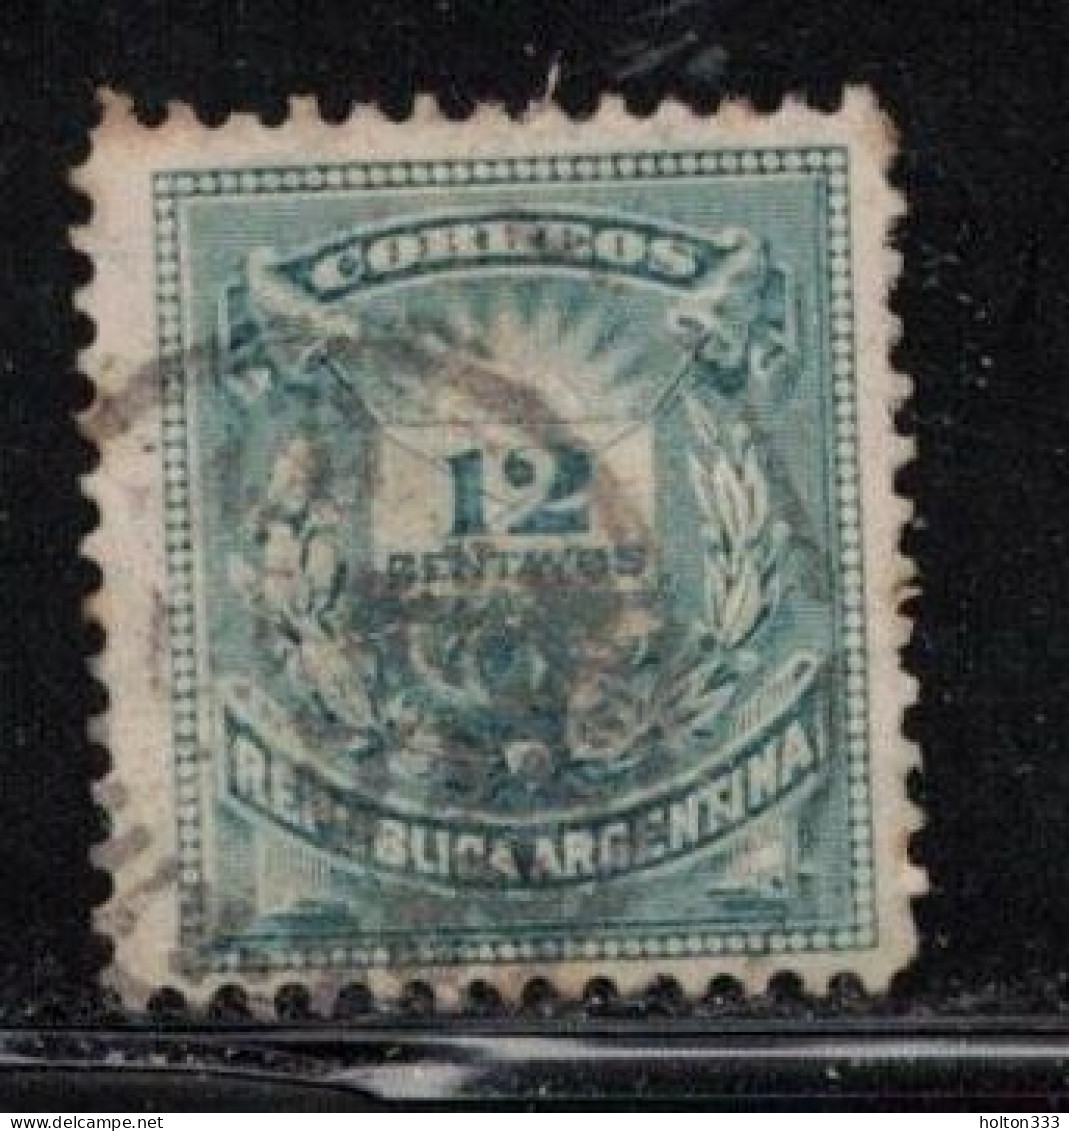 ARGENTINA Scott # 46 Used - Hinge Remnant 2 - Used Stamps